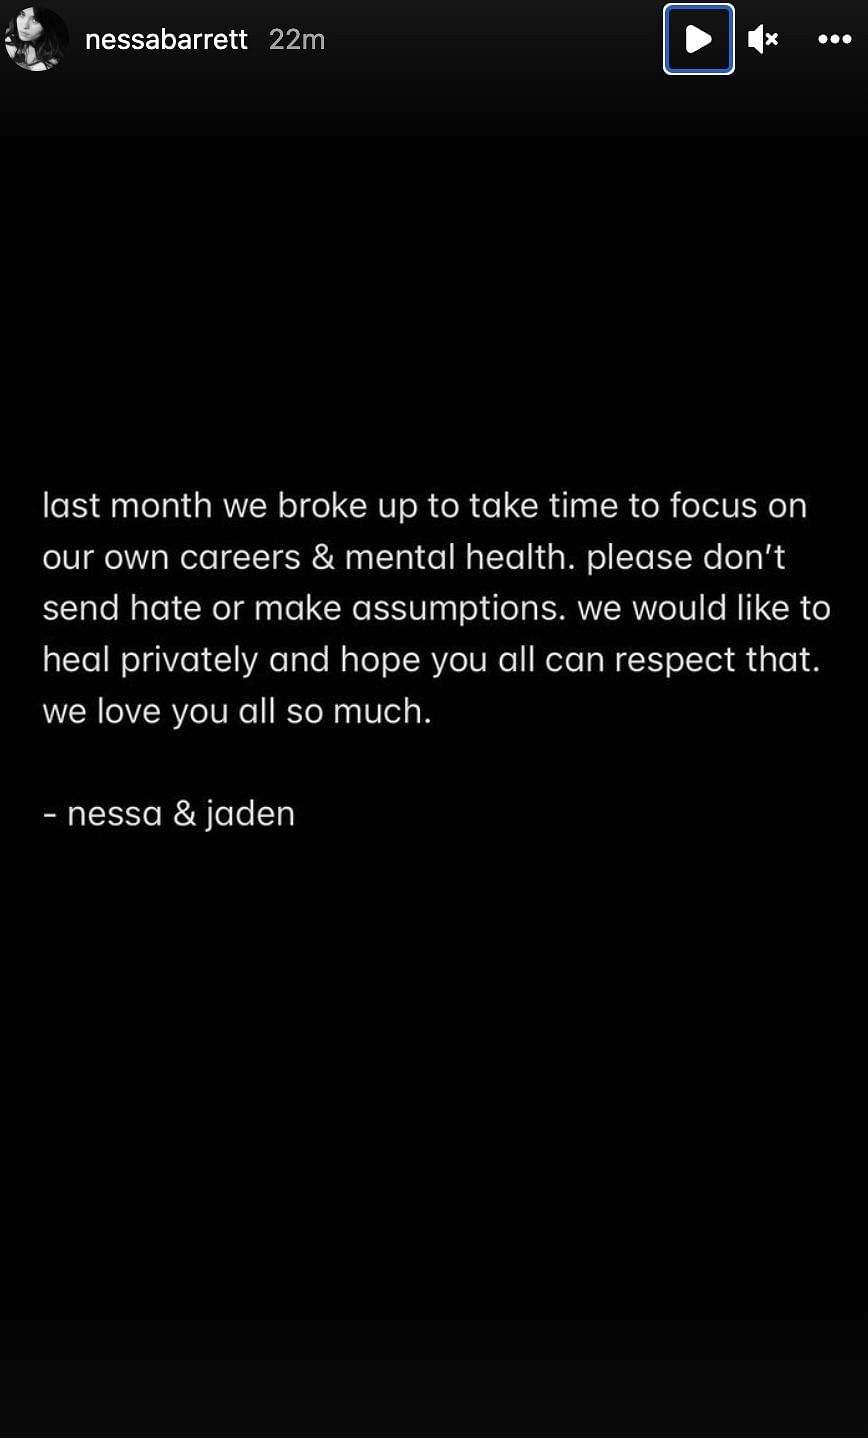 Nessa and Jaden confirmed their breakup in an Instagram post this year after the split. (Image via @nessabarrett/ Instagram)